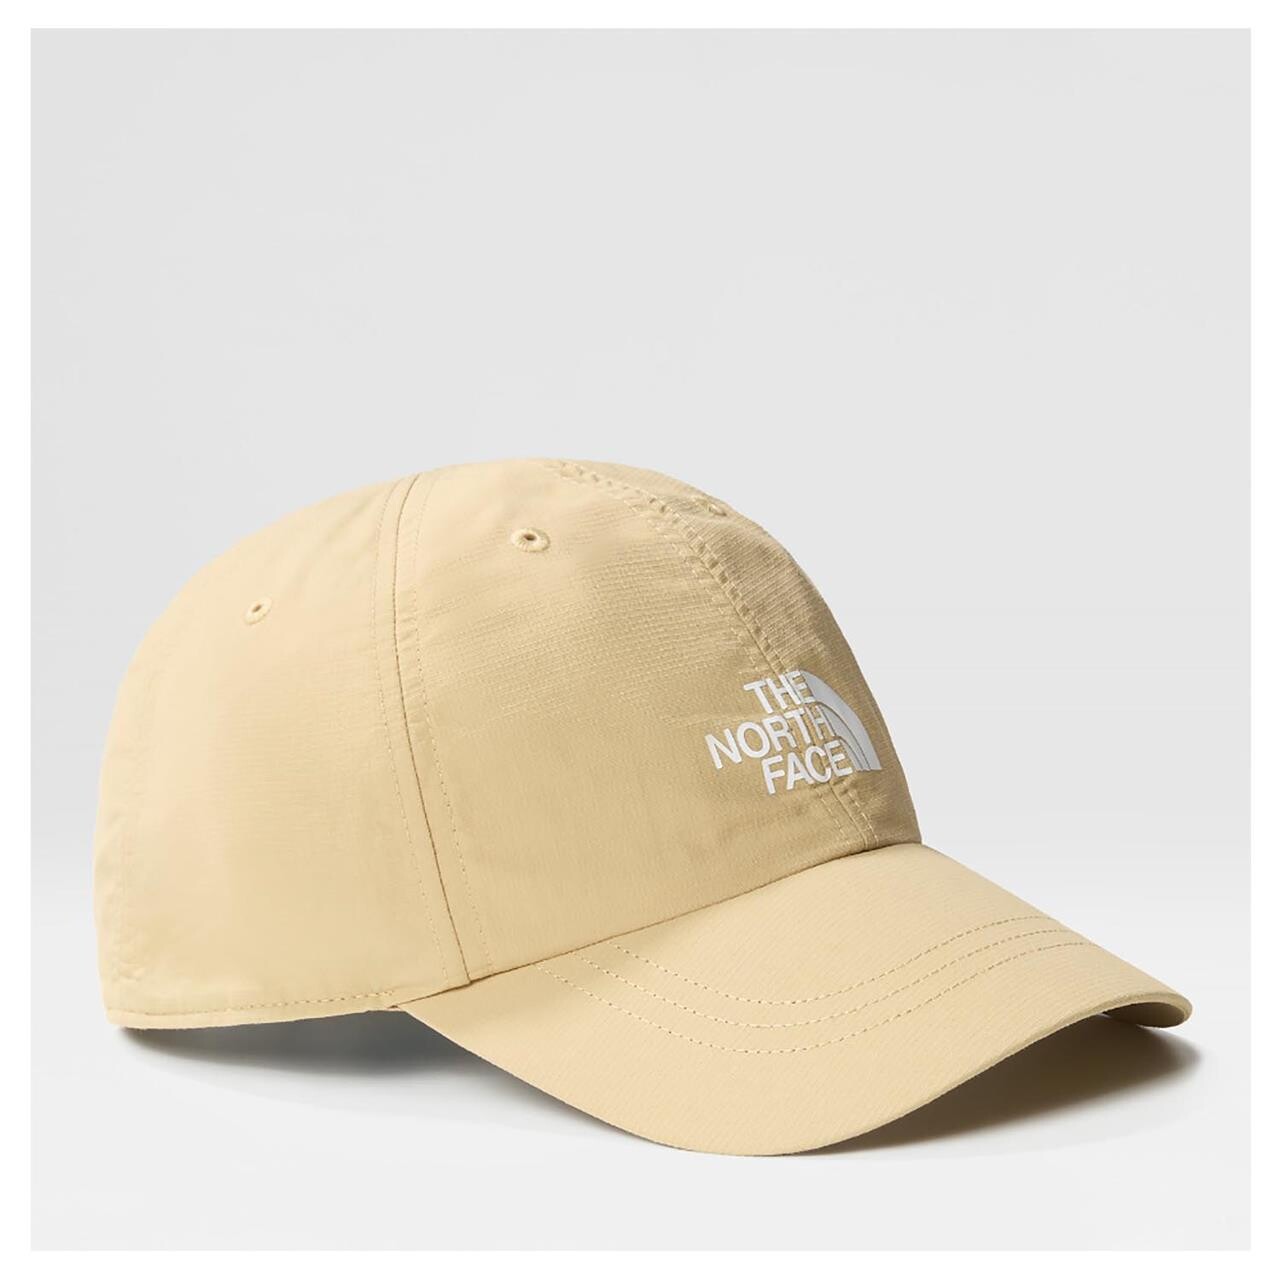 11: The North Face Horizon Hat (Beige (KHAKI STONE) One size)